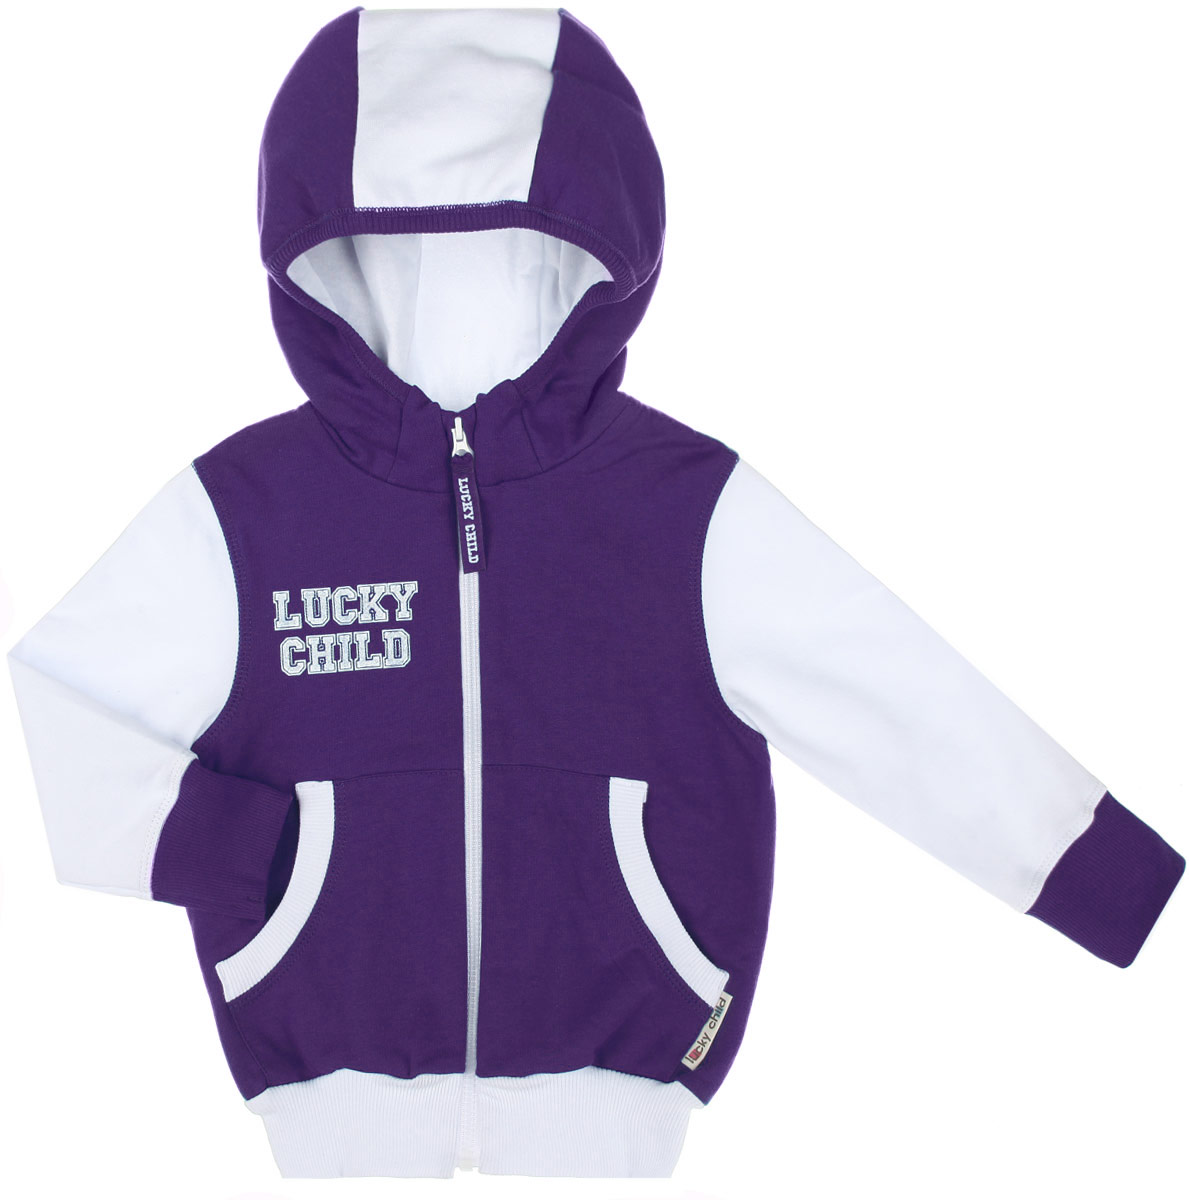 Толстовка детская Lucky Child, цвет: фиолетовый, белый. 8-19. Размер 74/80, 6-9 месяцев